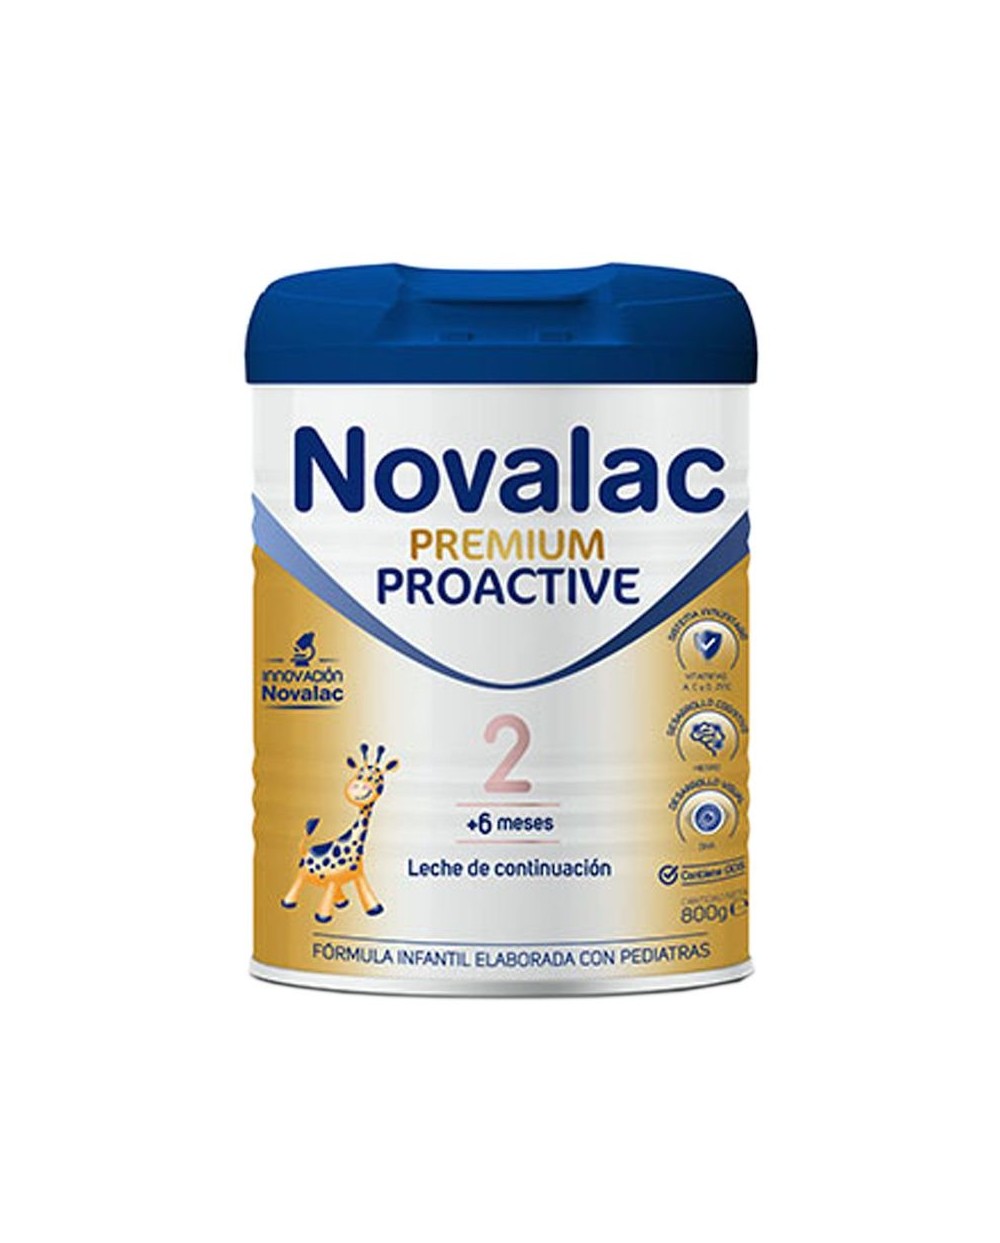 Novalac Premium Proactive 2 (+6 meses) - 800gr.